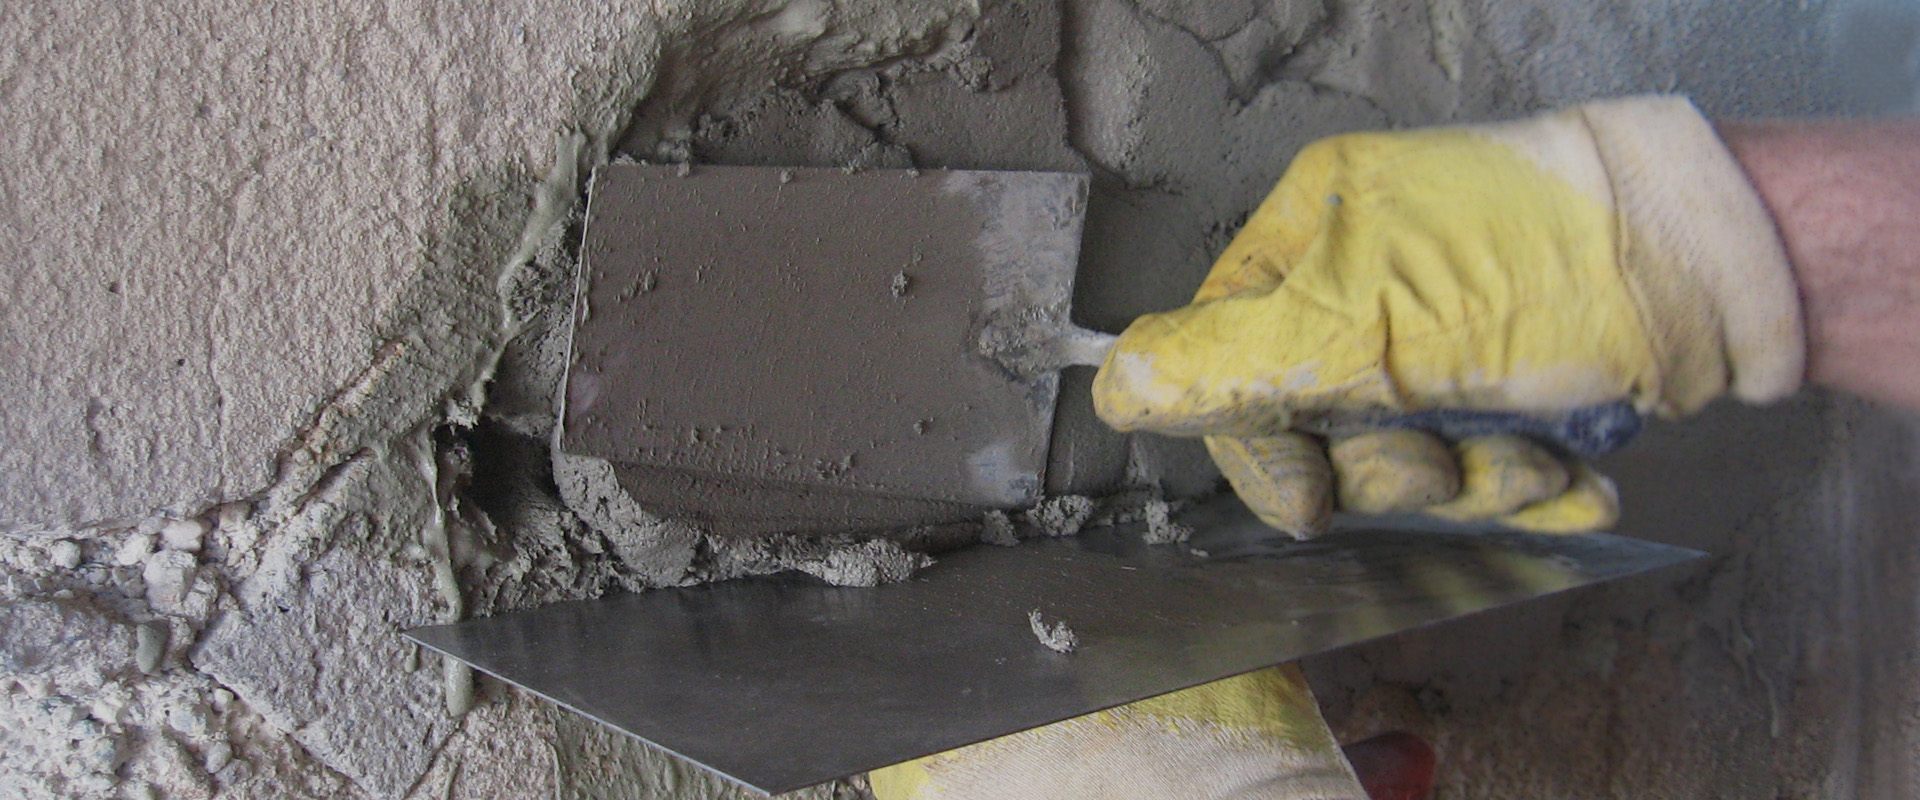 Concrete replacement